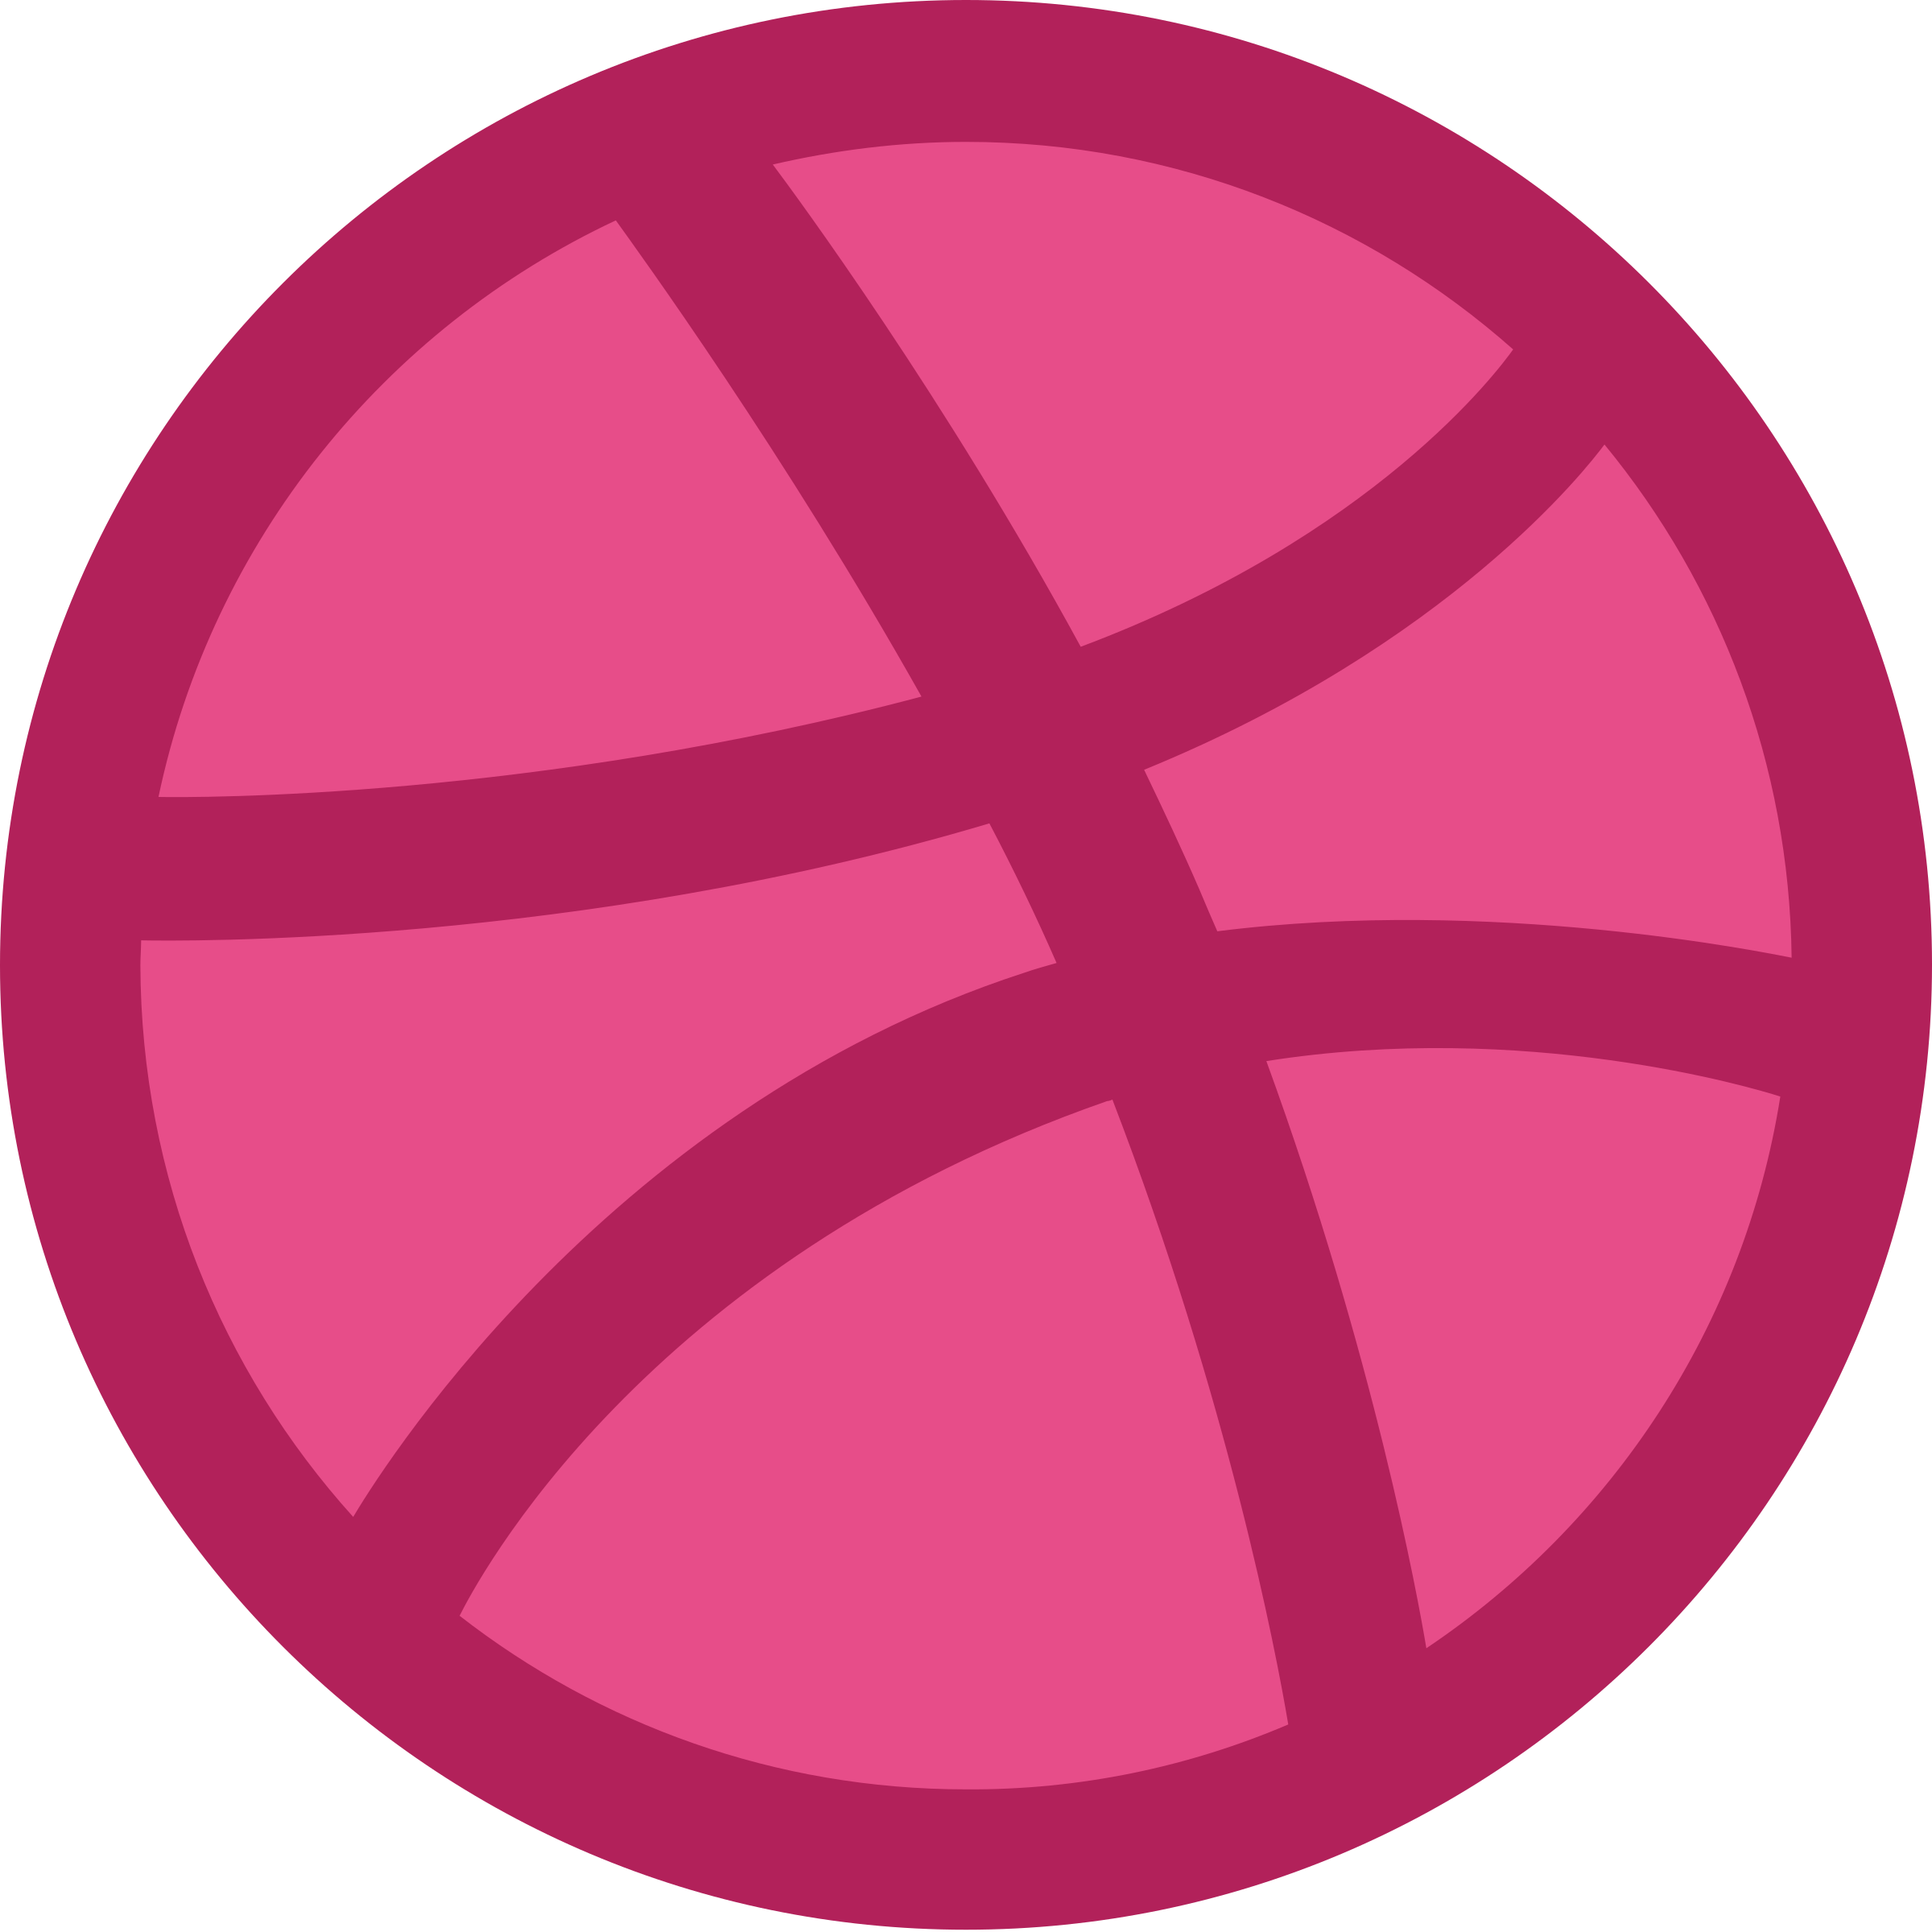 Pink,Circle,Magenta,Symbol,Line,Material property,Graphics,Logo,Clip art